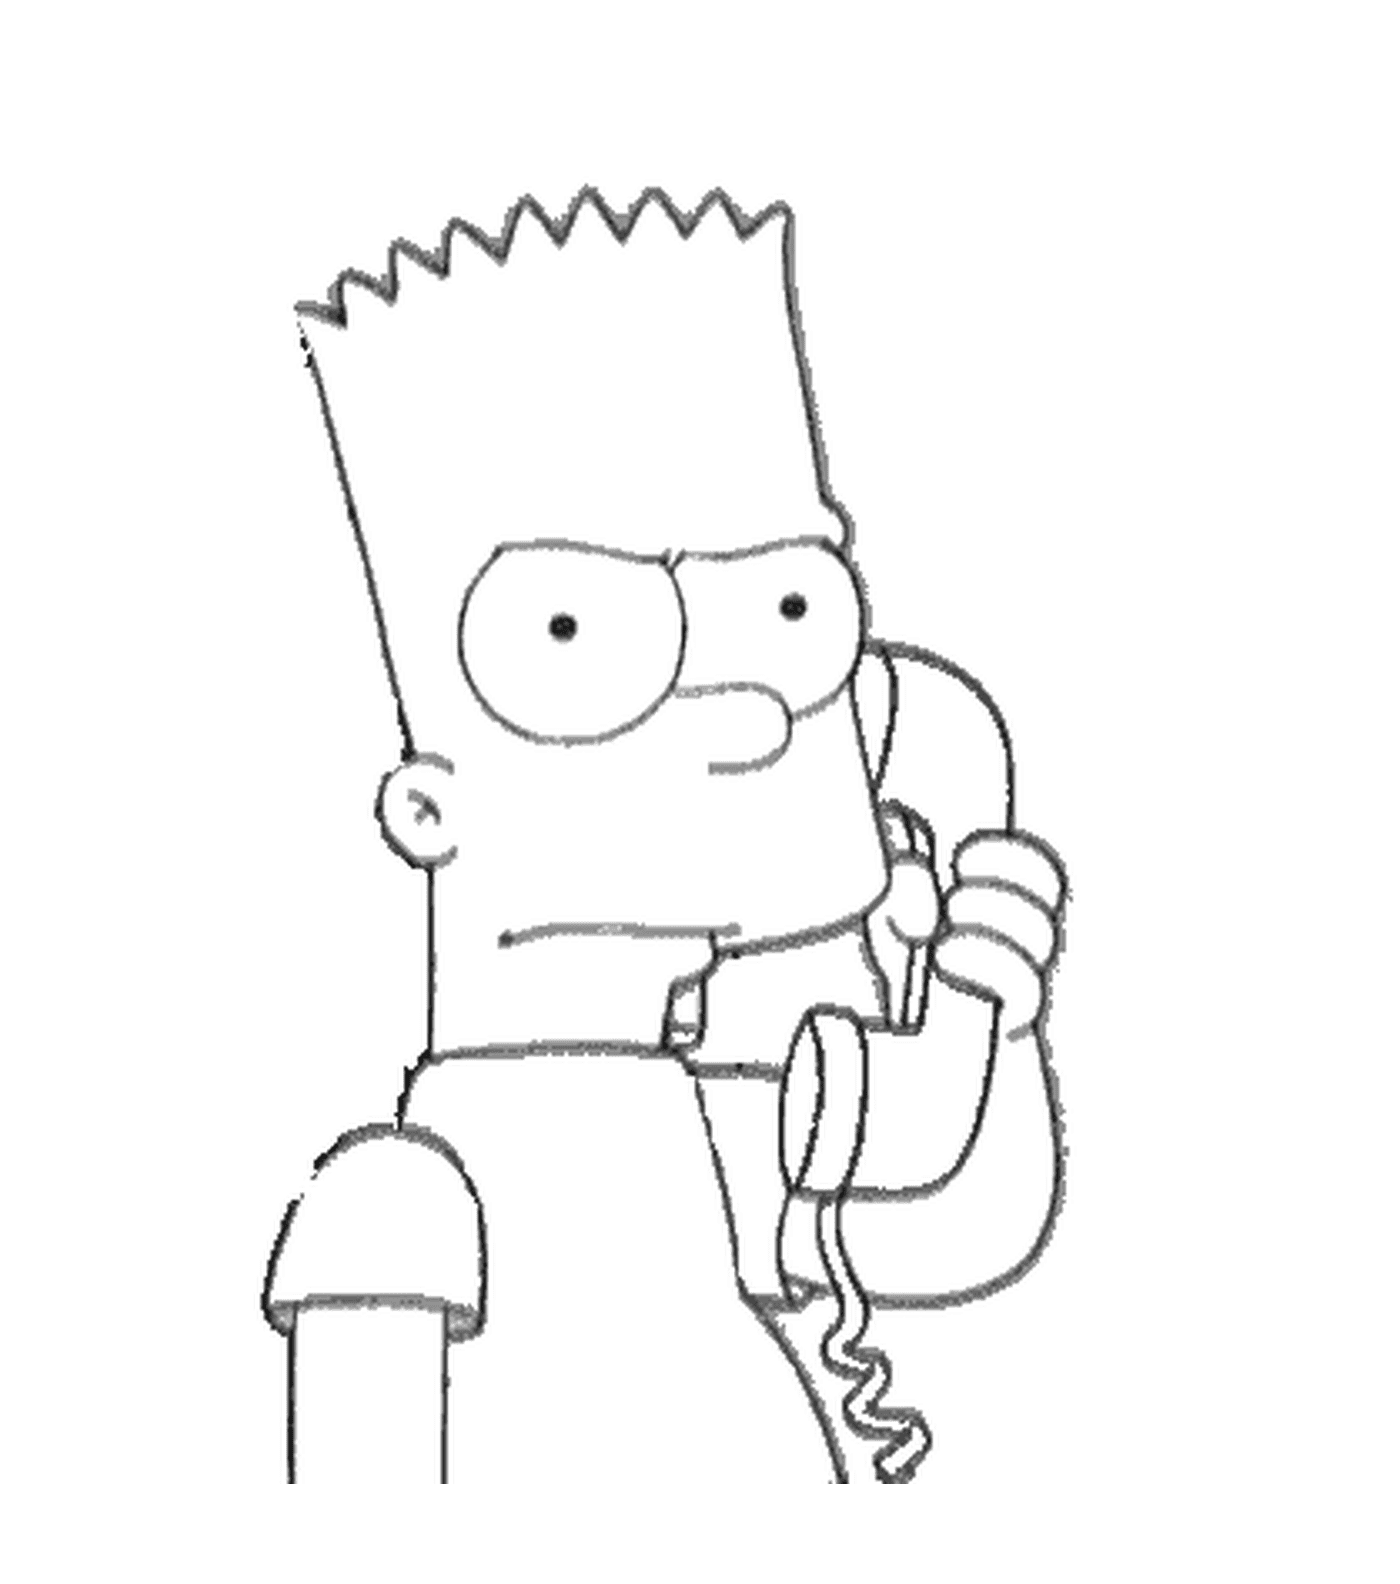  Bart habla en serio por teléfono 